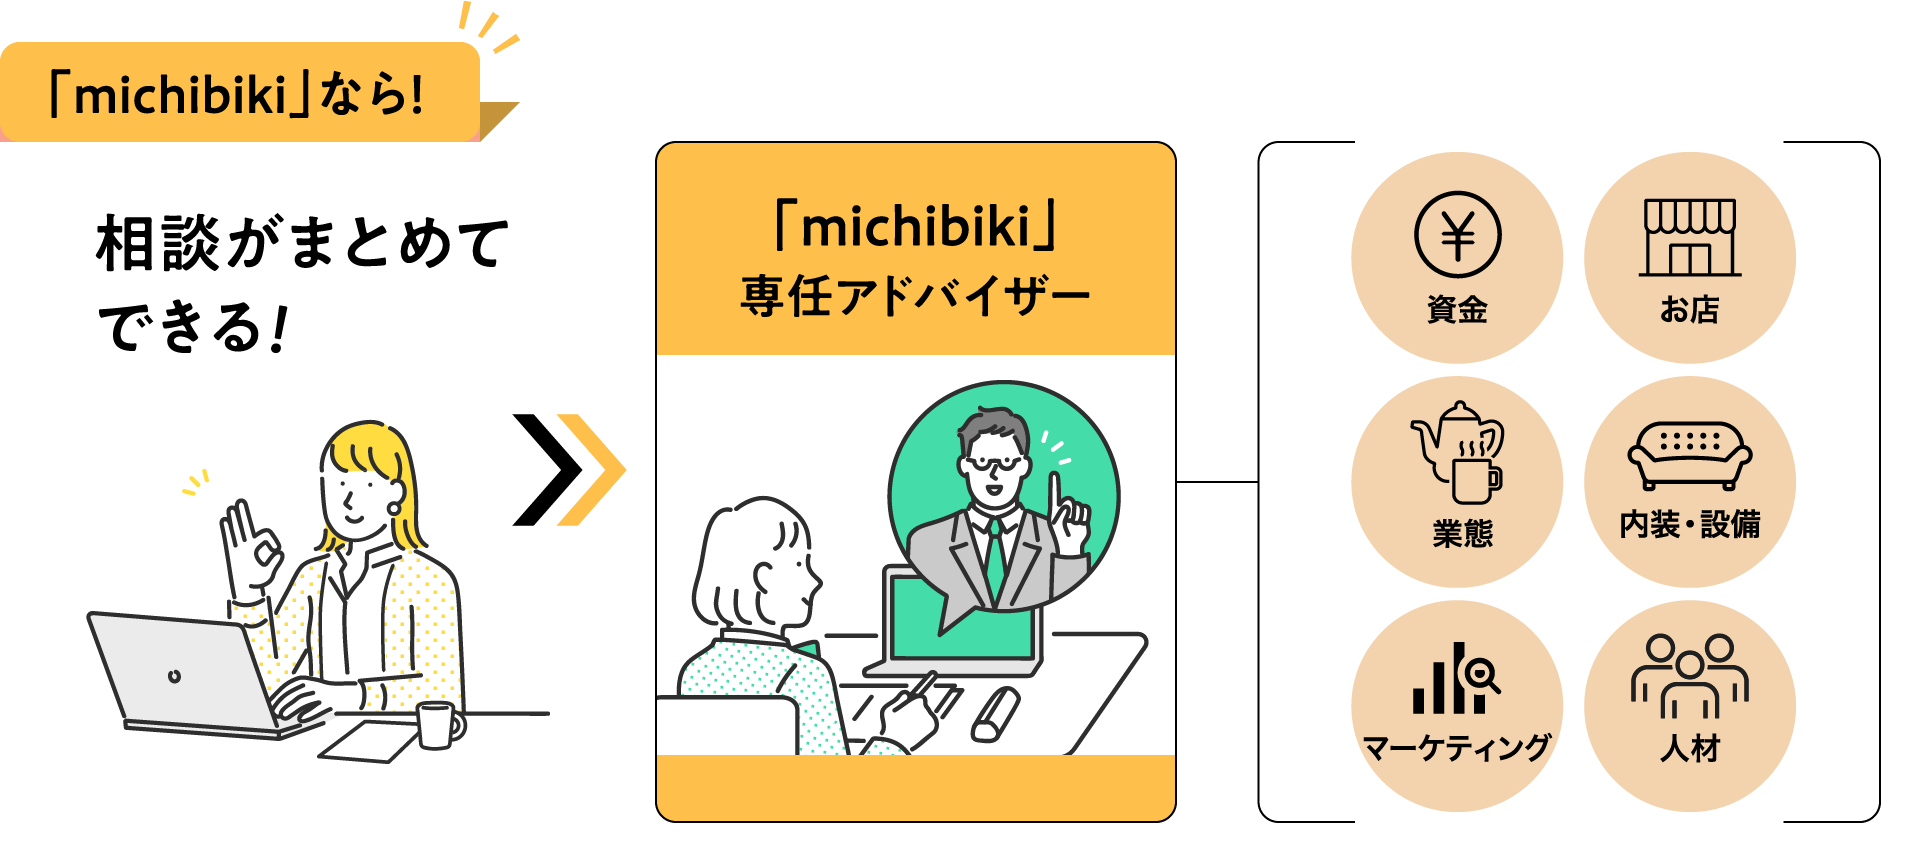 「michibiki」なら！相談がまとめてできる！「michibiki」専任アドバイザー 資金 業態 マーケティング お店 内装・設備 人材